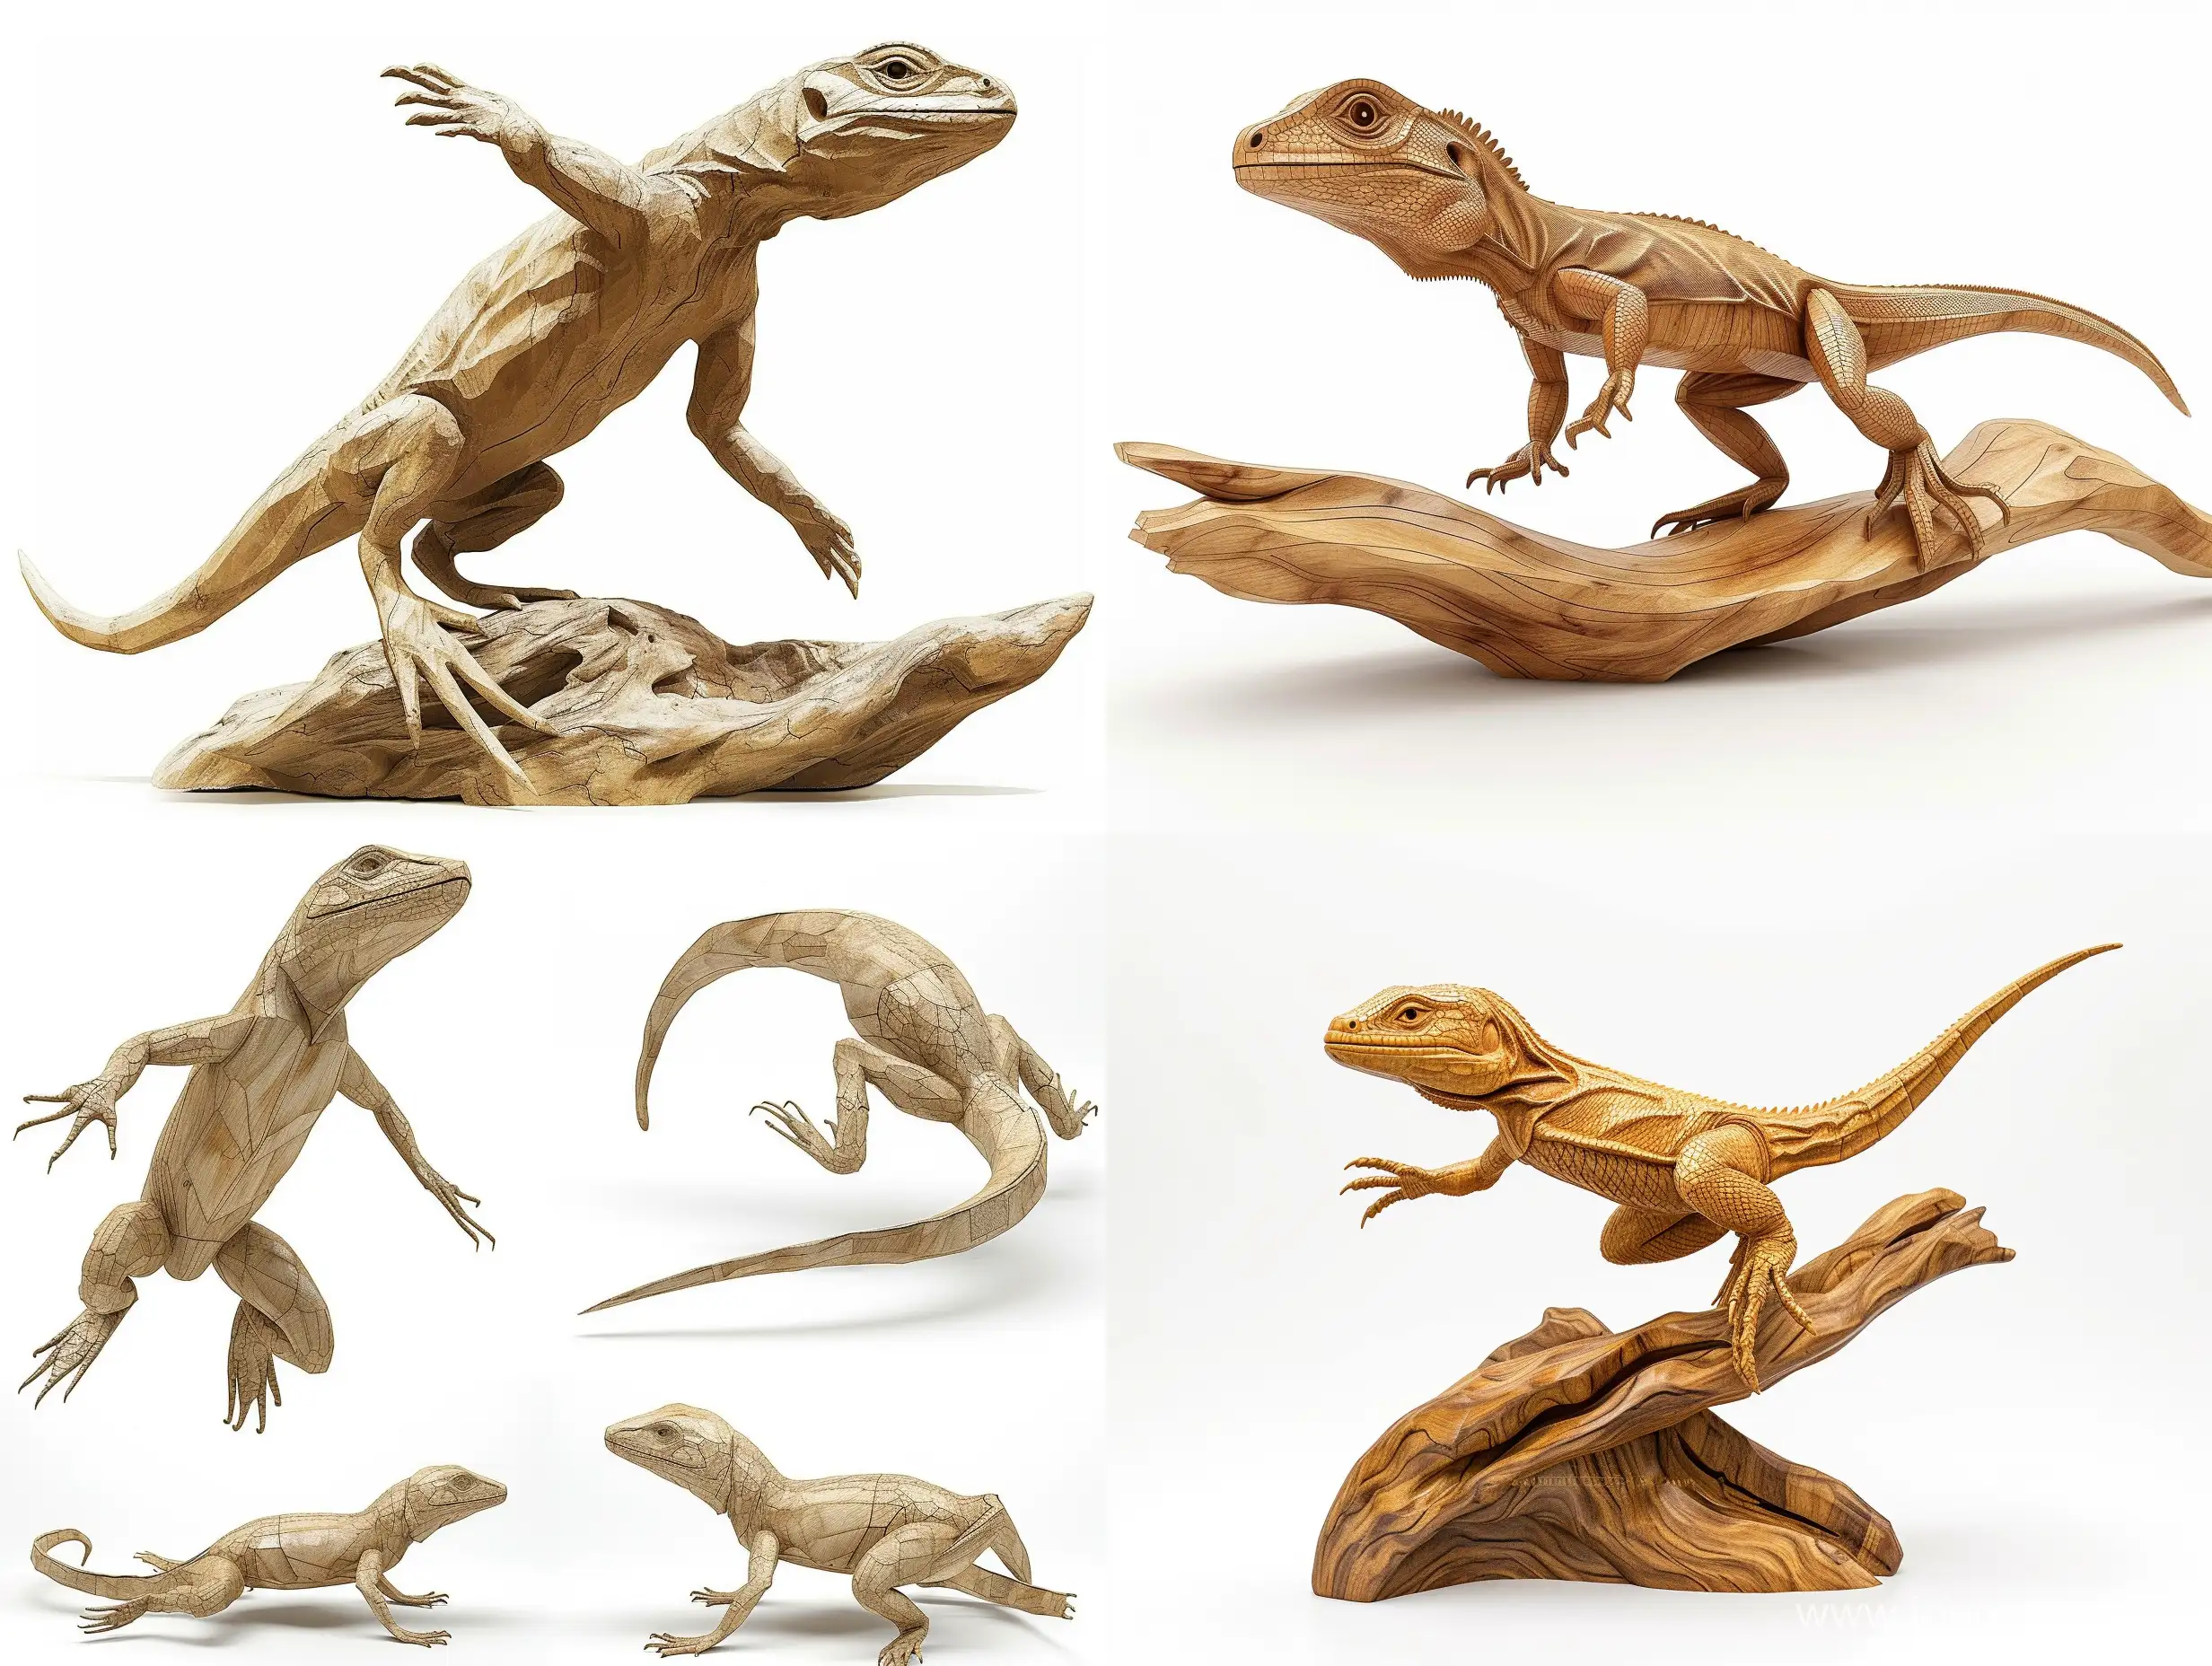 Realistic-Wooden-Lizard-Sculpture-Jumping-in-8K-Render